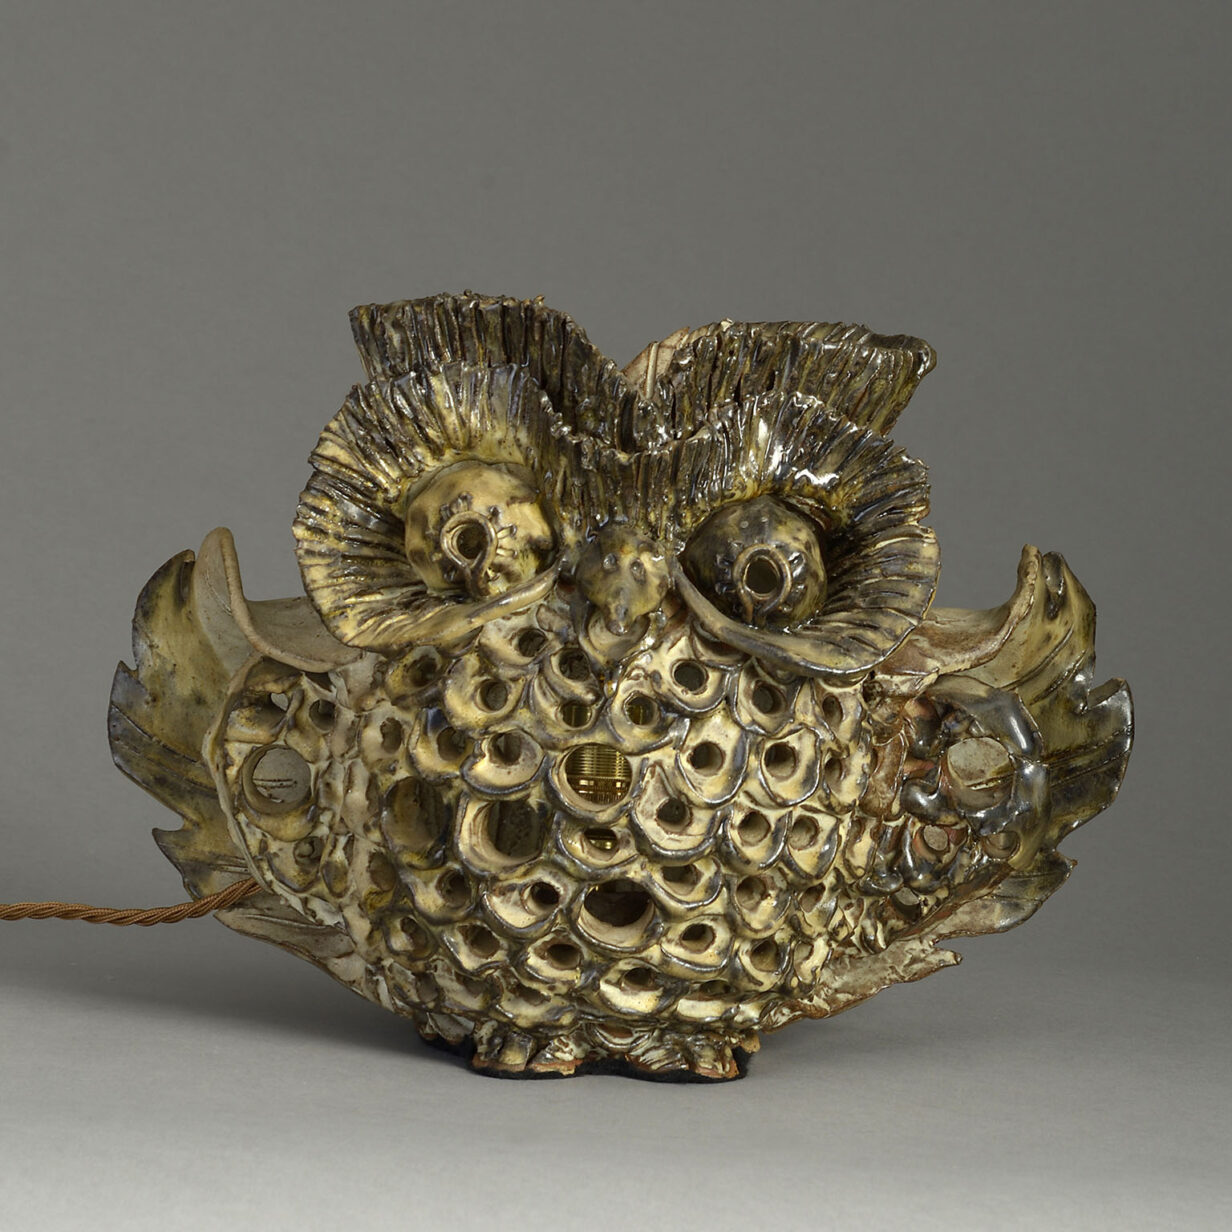 An unusual mid-20th century ceramic owl lamp